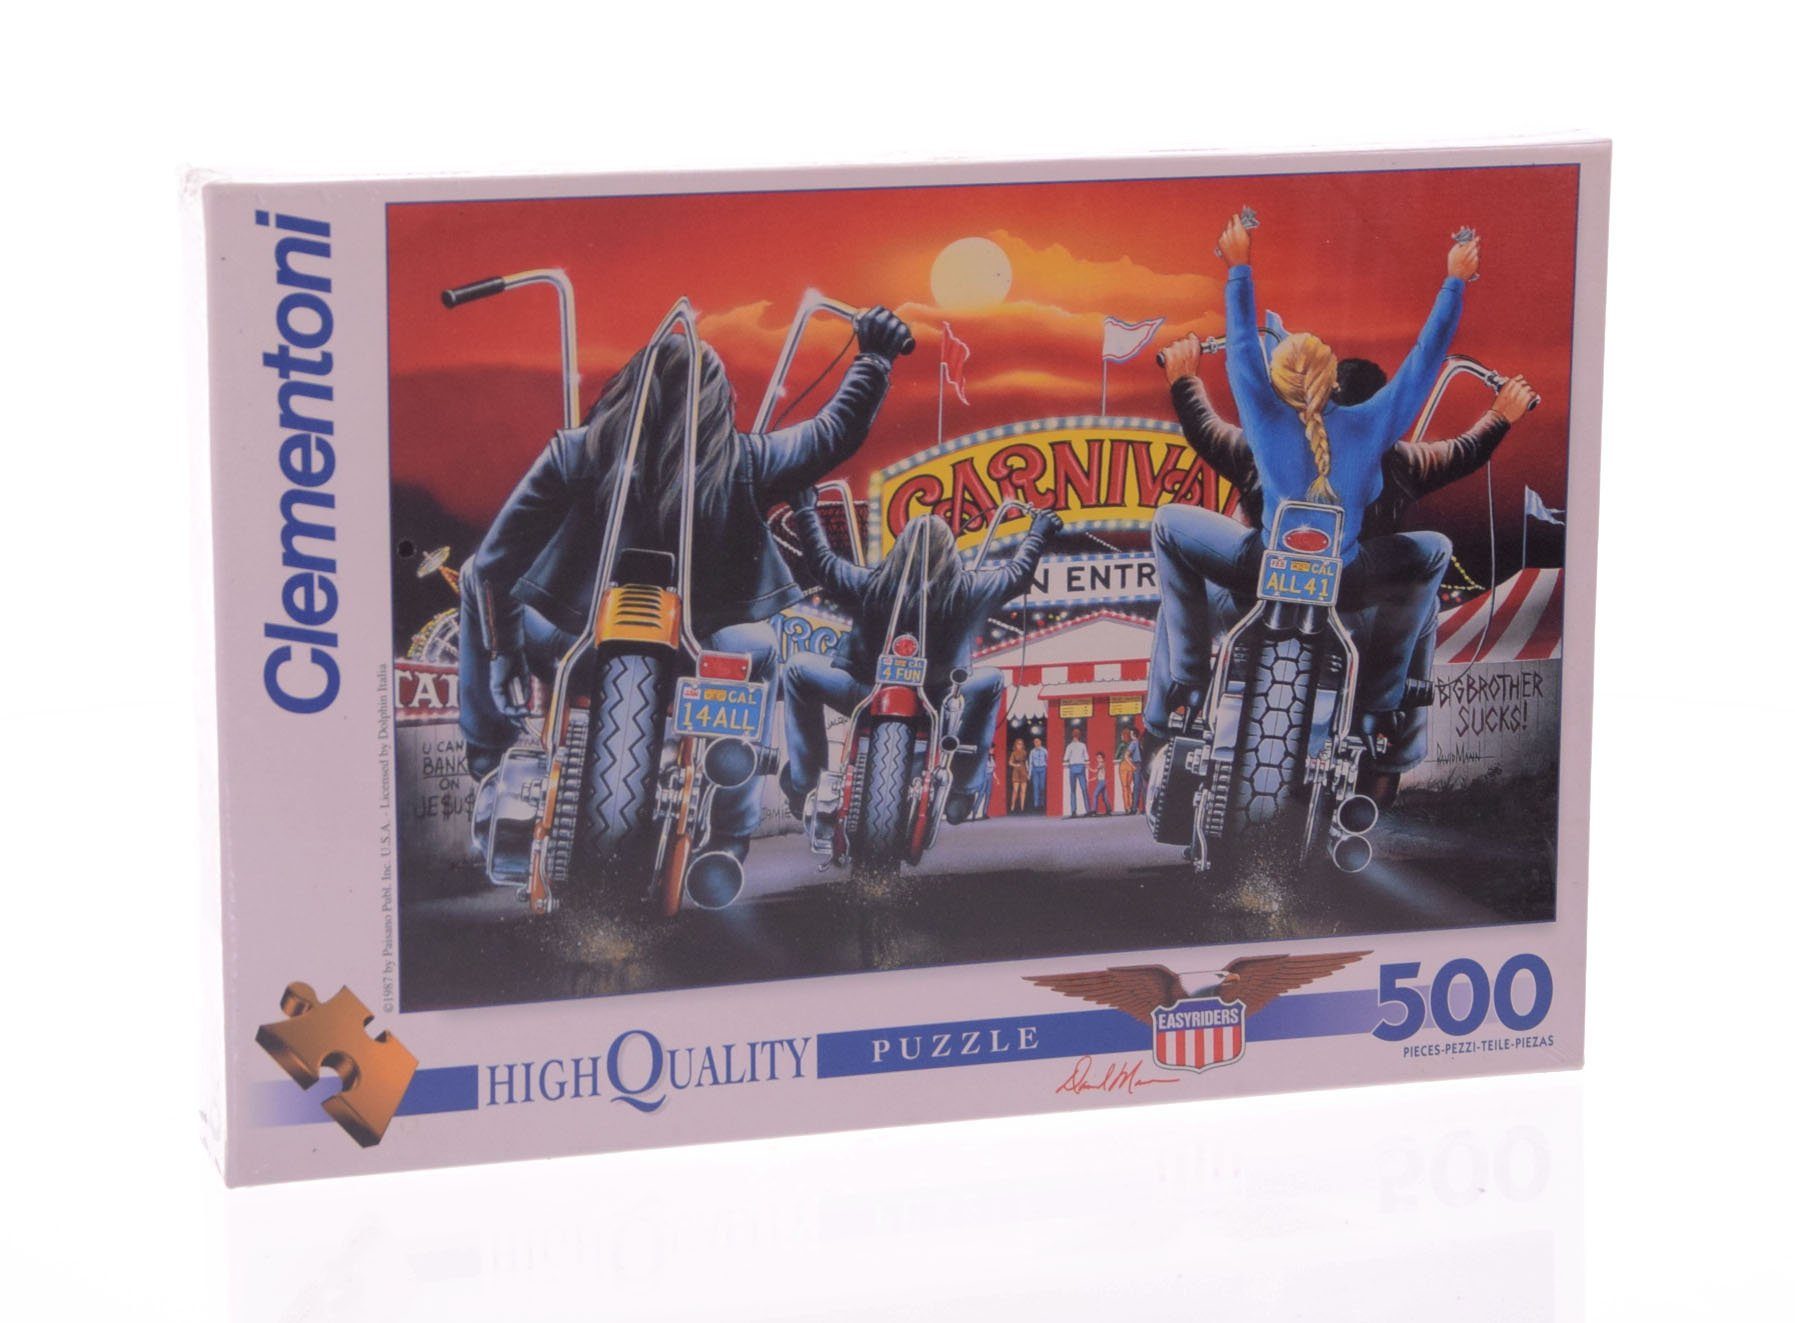 500 Puzzle Clementoni Puzzleteile Carnival" Clementoni® Teile, Collection Puzzle 500 "HD High Quality